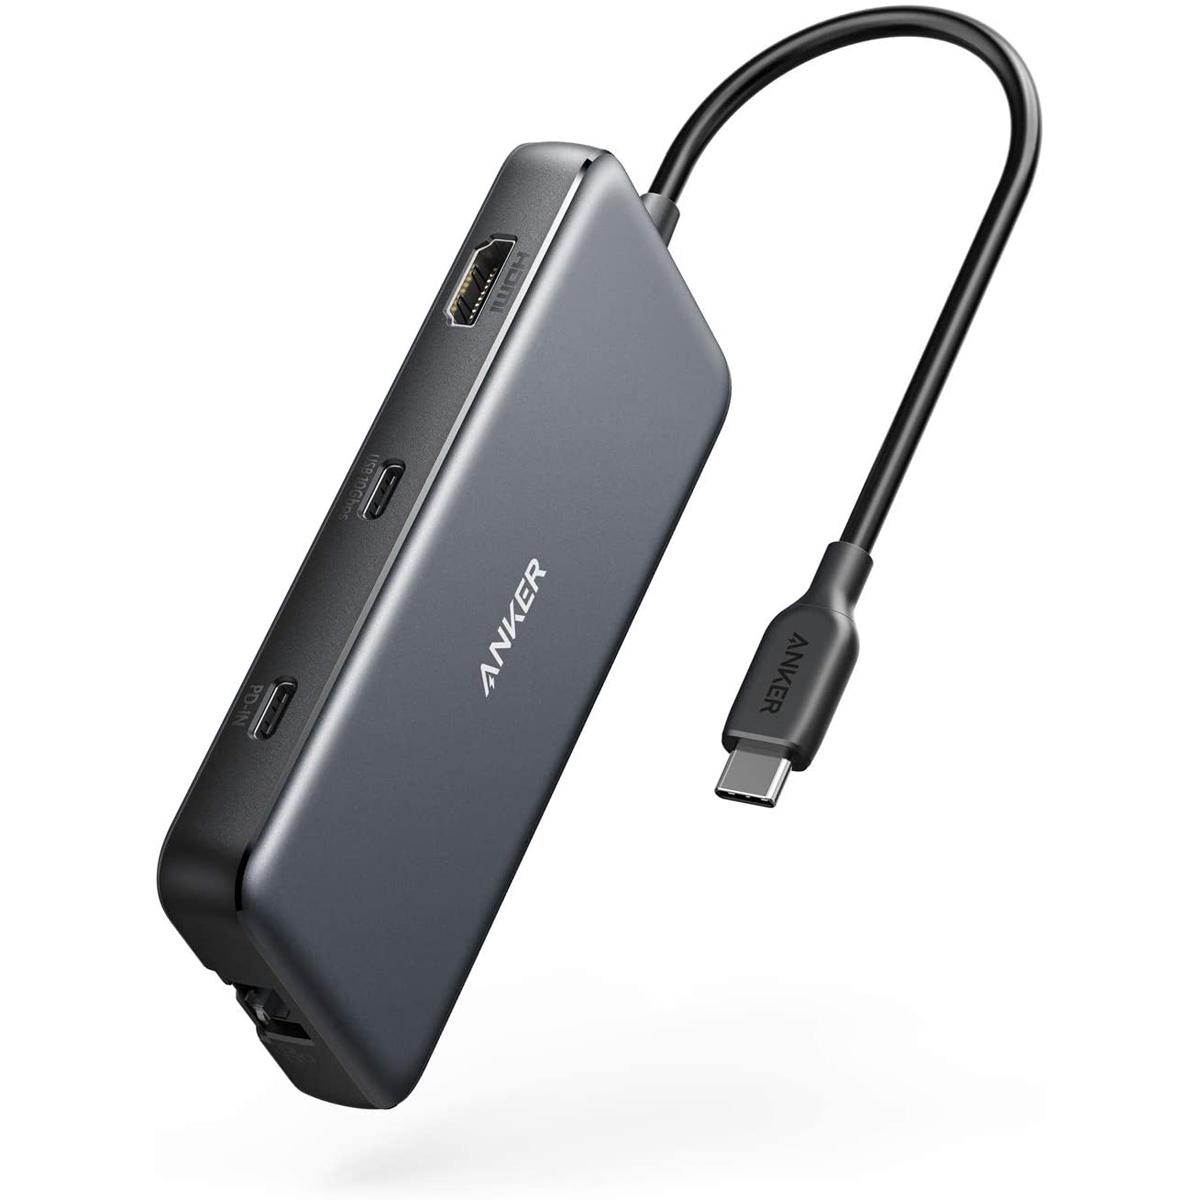 Anker USB C 8-in-1 Hub for $39.99 Shipped